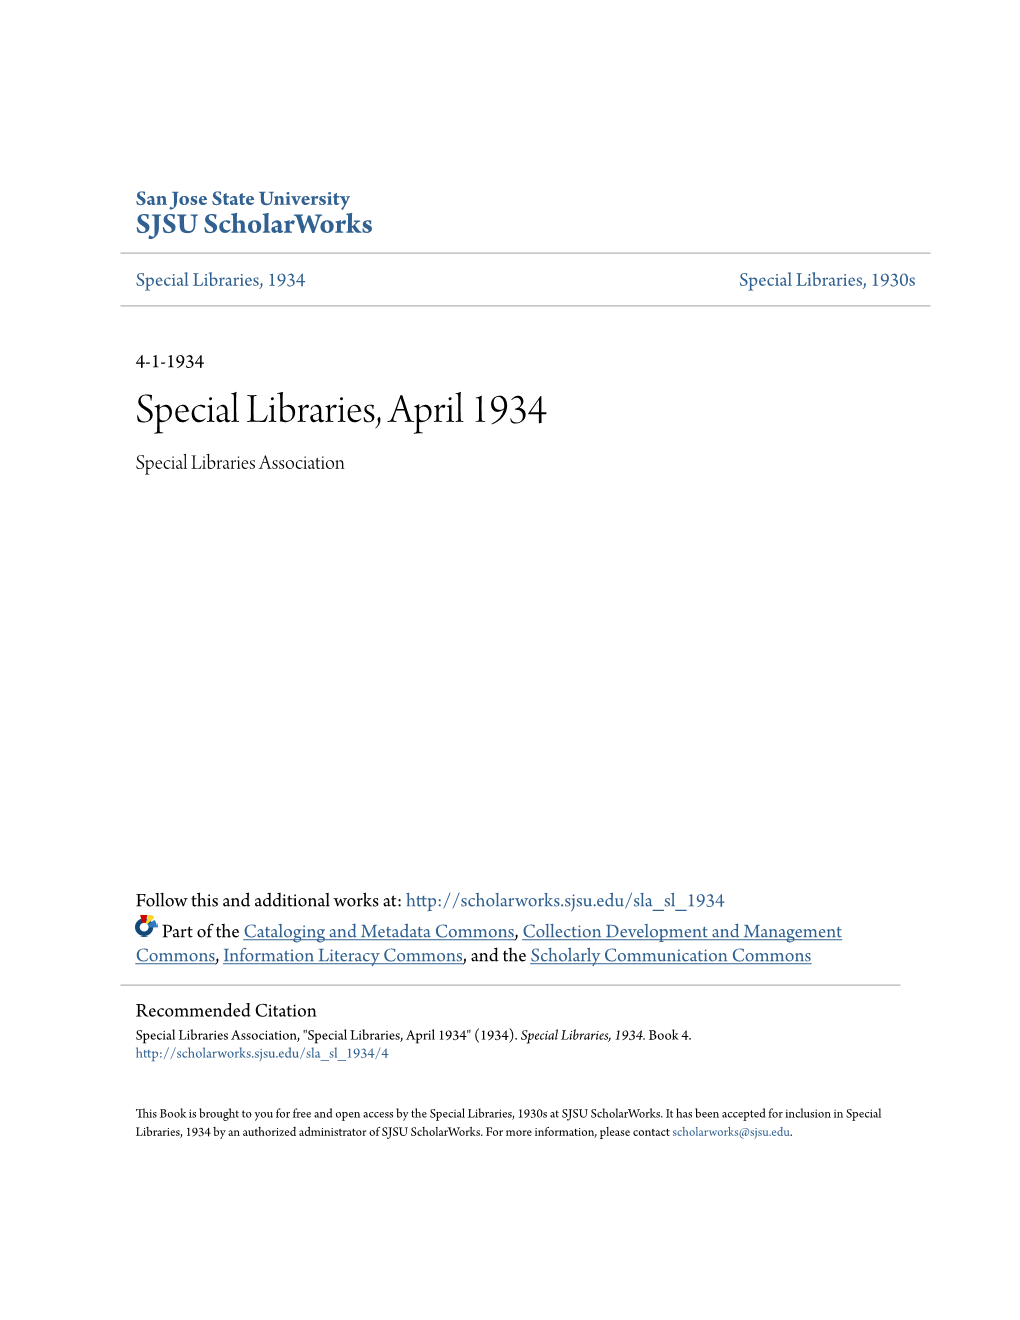 Special Libraries, April 1934 Special Libraries Association